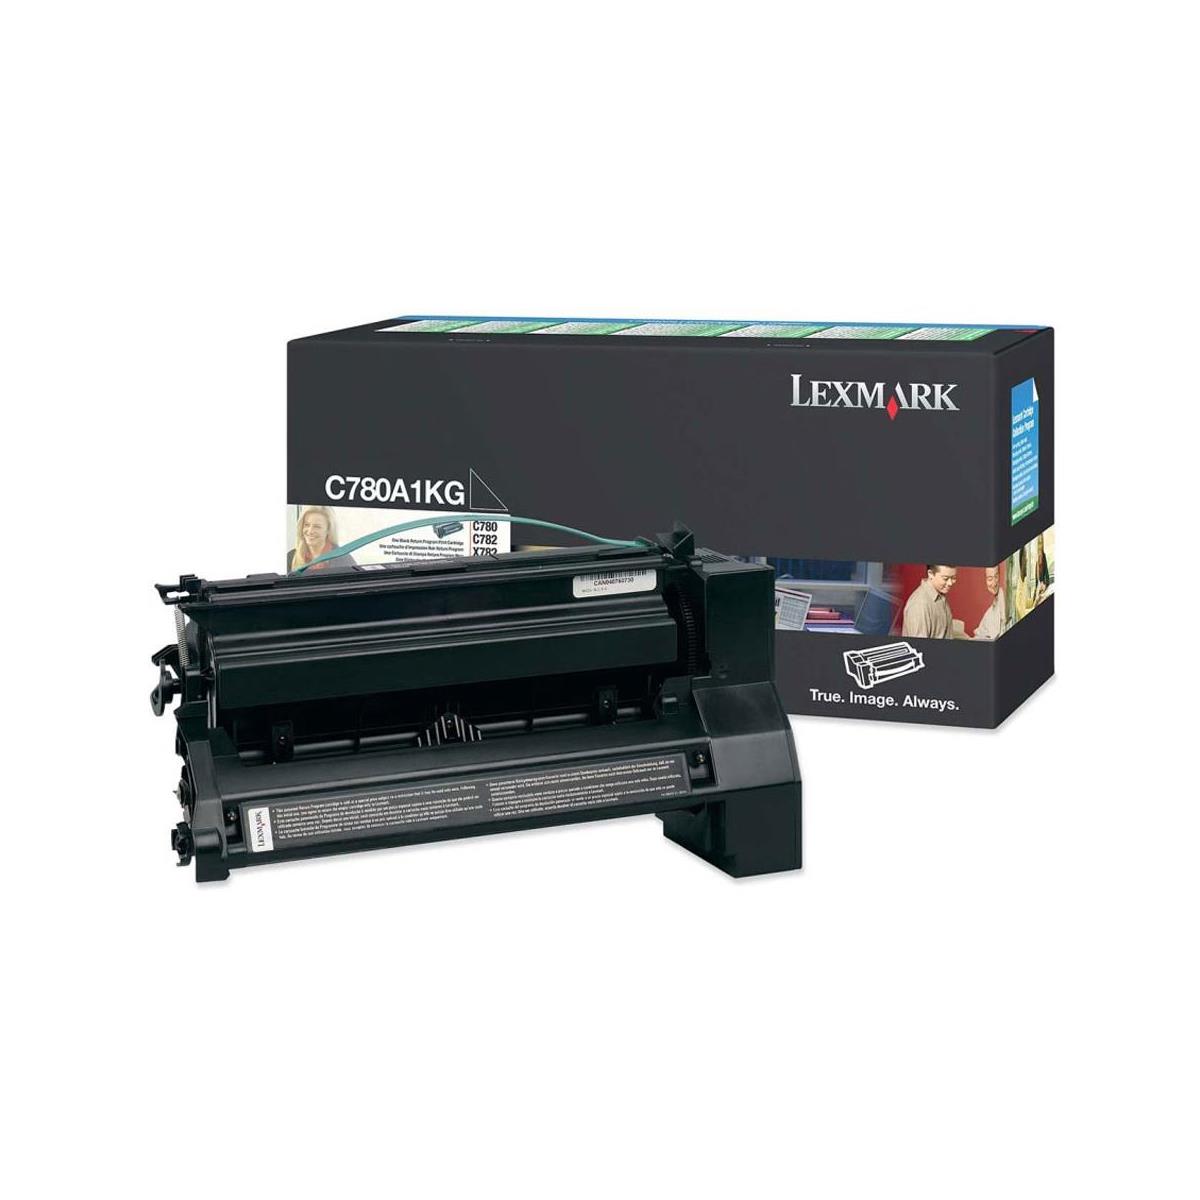 Image of Lexmark C780A1KG Lexmark Black Toner Cartridge